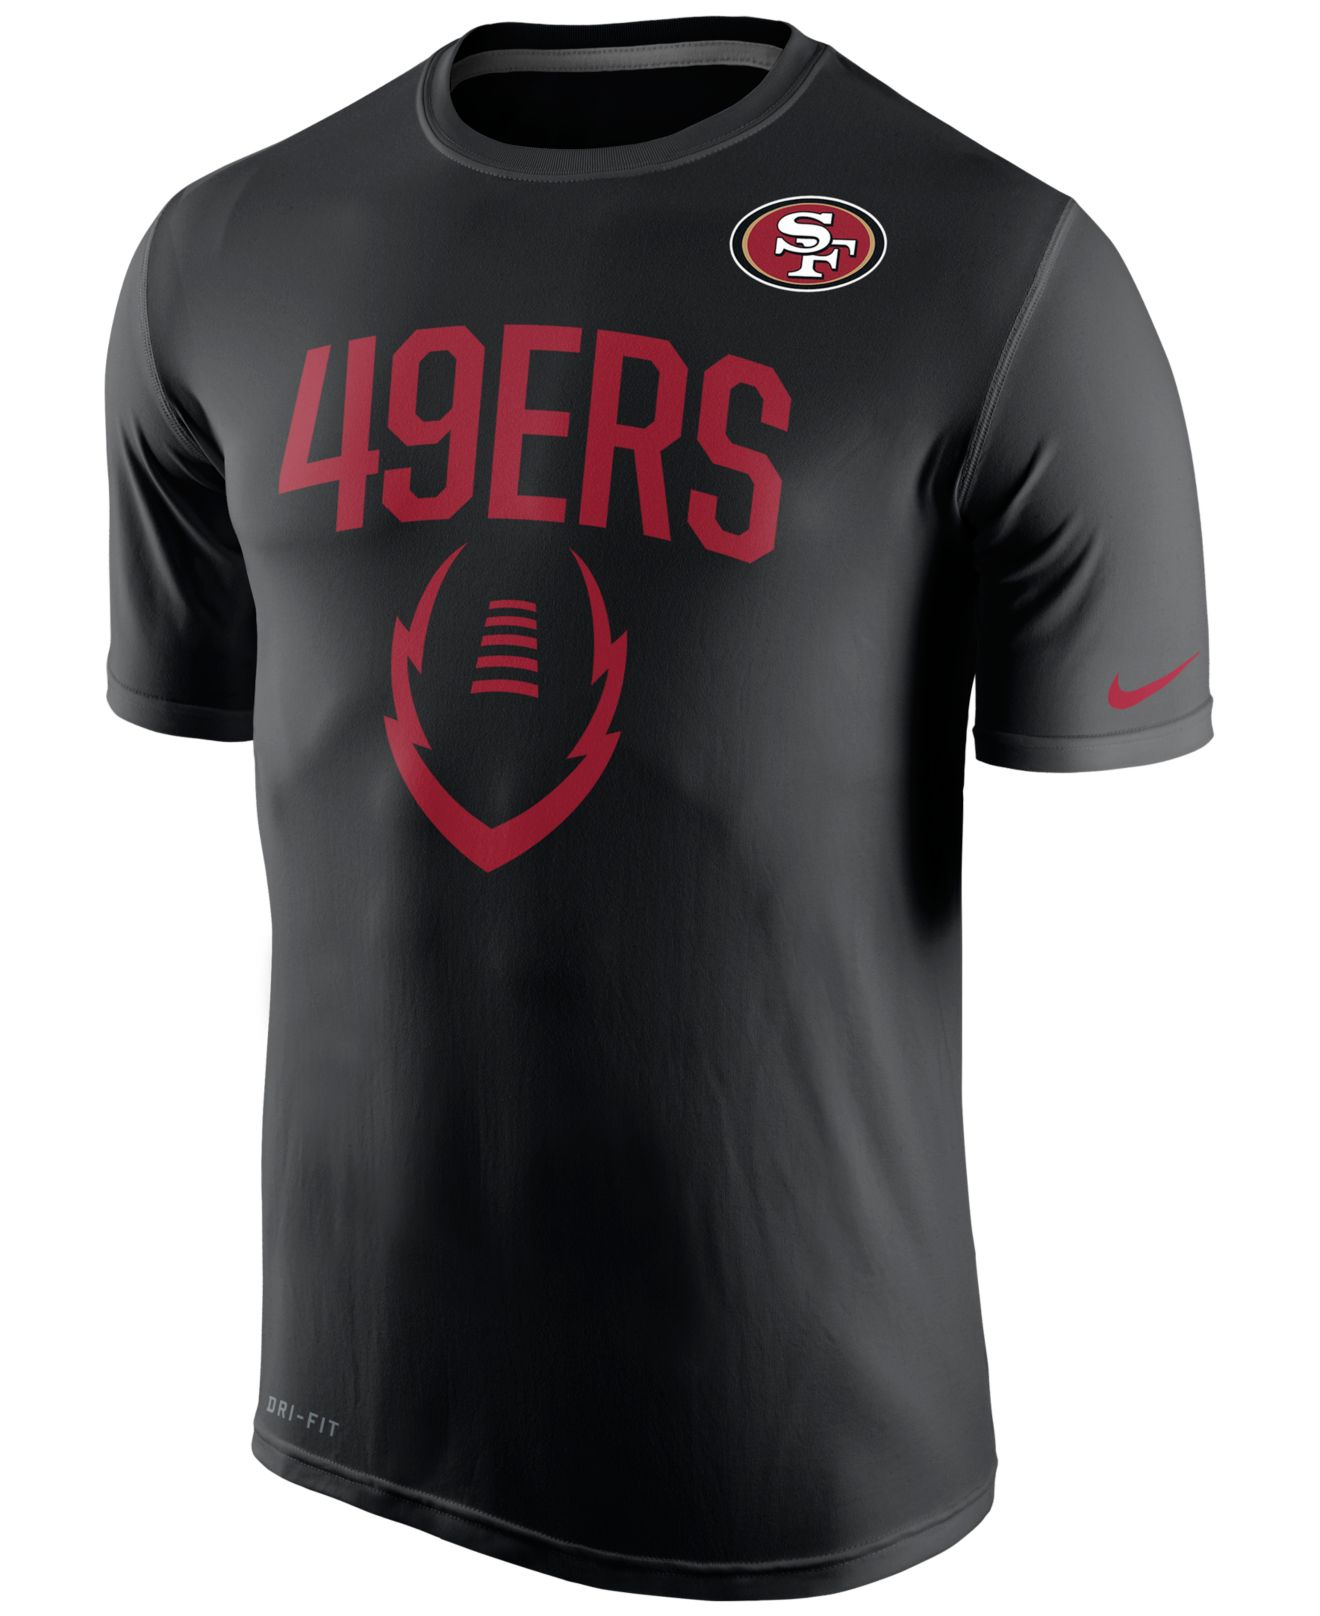 Lyst - Nike Men's San Francisco 49ers Legend Icon T-shirt in Black for Men